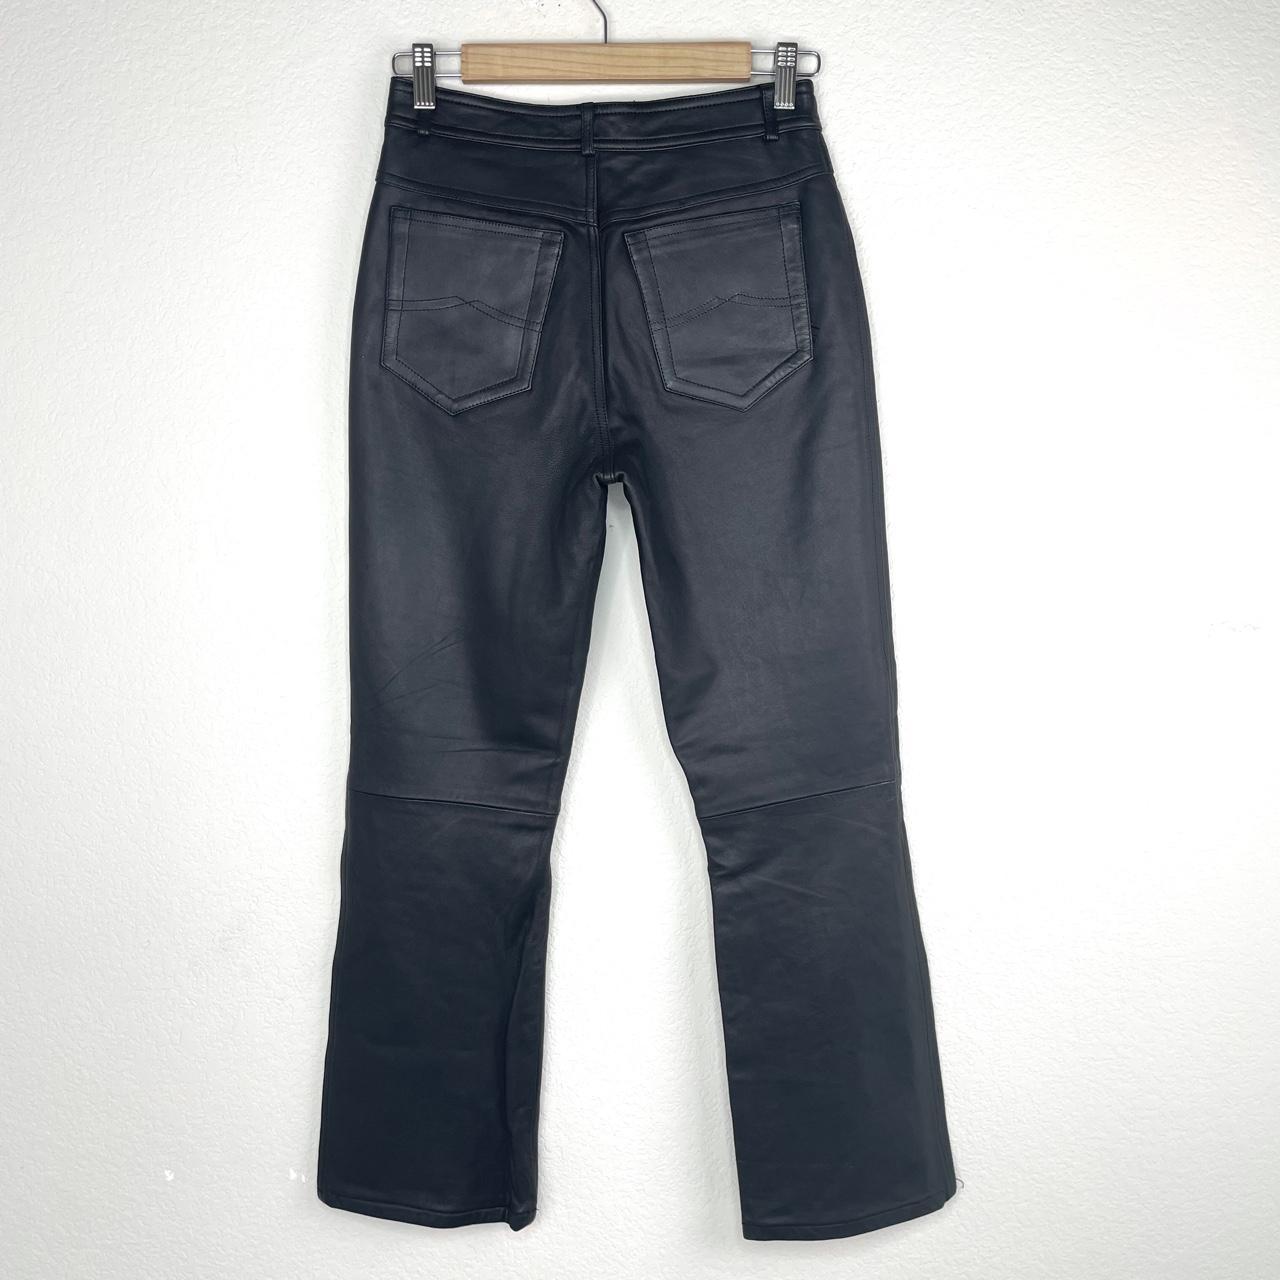 Product Image 3 - Vintage Black Leather Pants 

Amazing